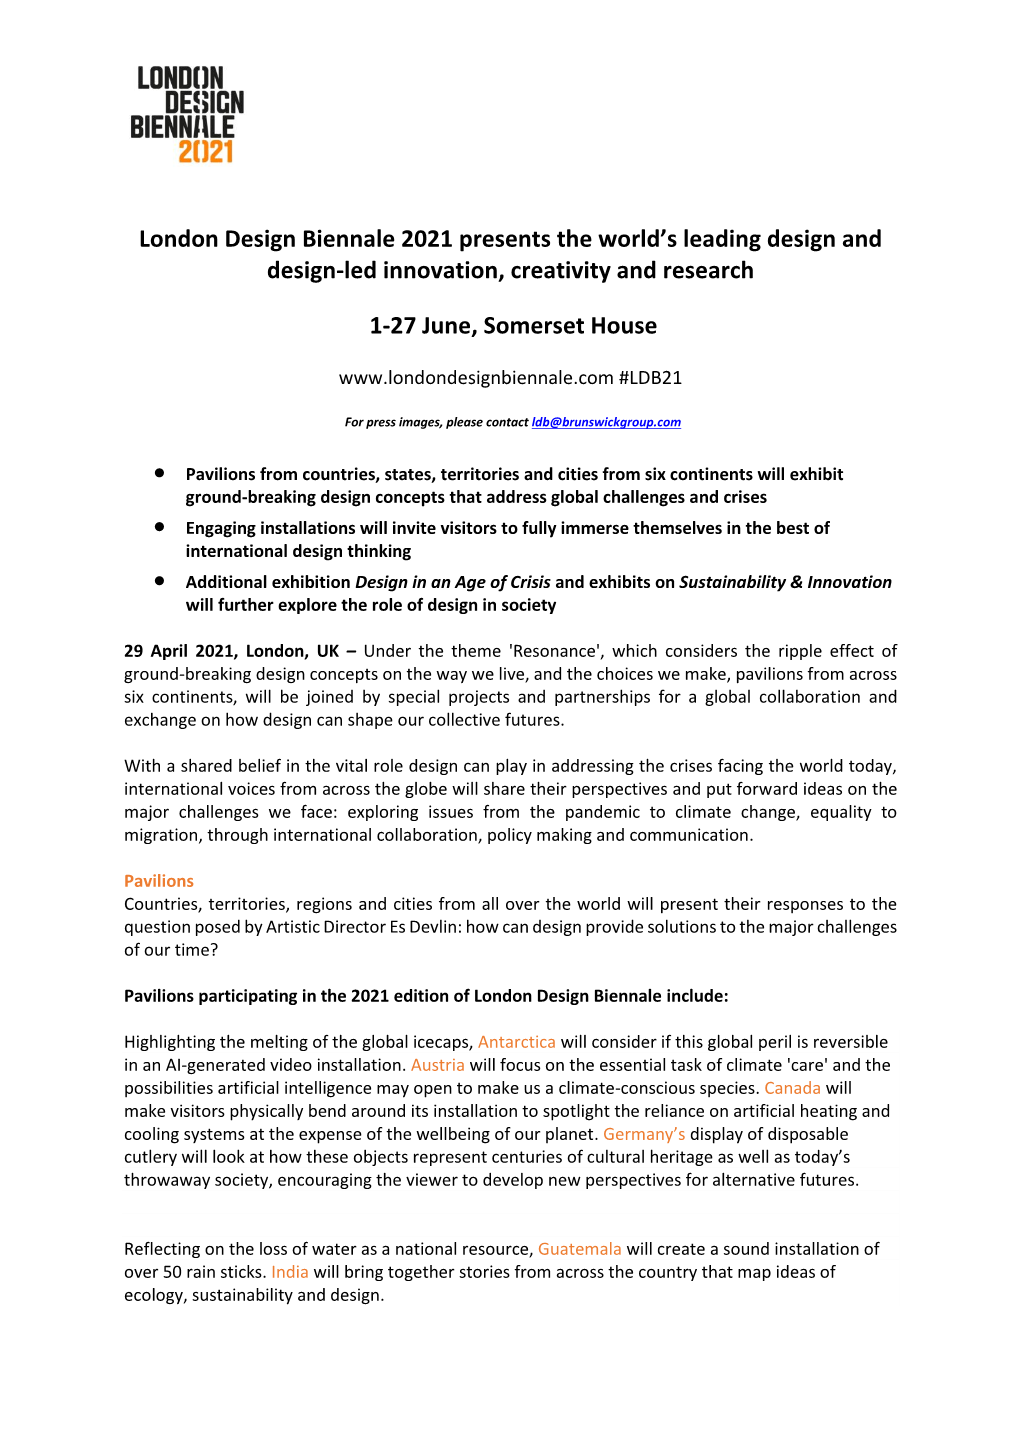 London Design Biennale 2021 Presents the World's Leading Design